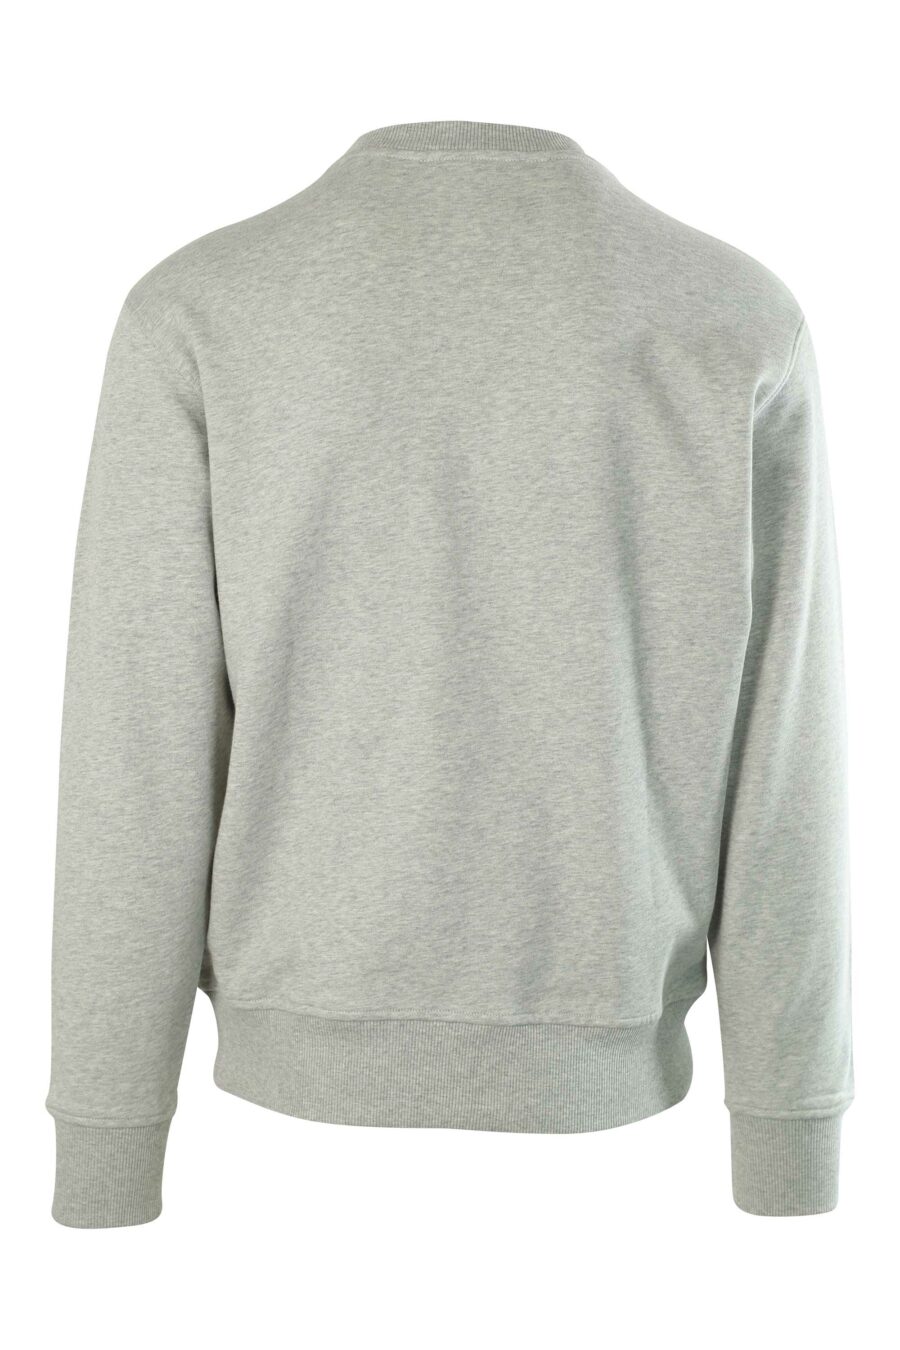 Grey sweatshirt with green interlaced logo - 8052019239027 2